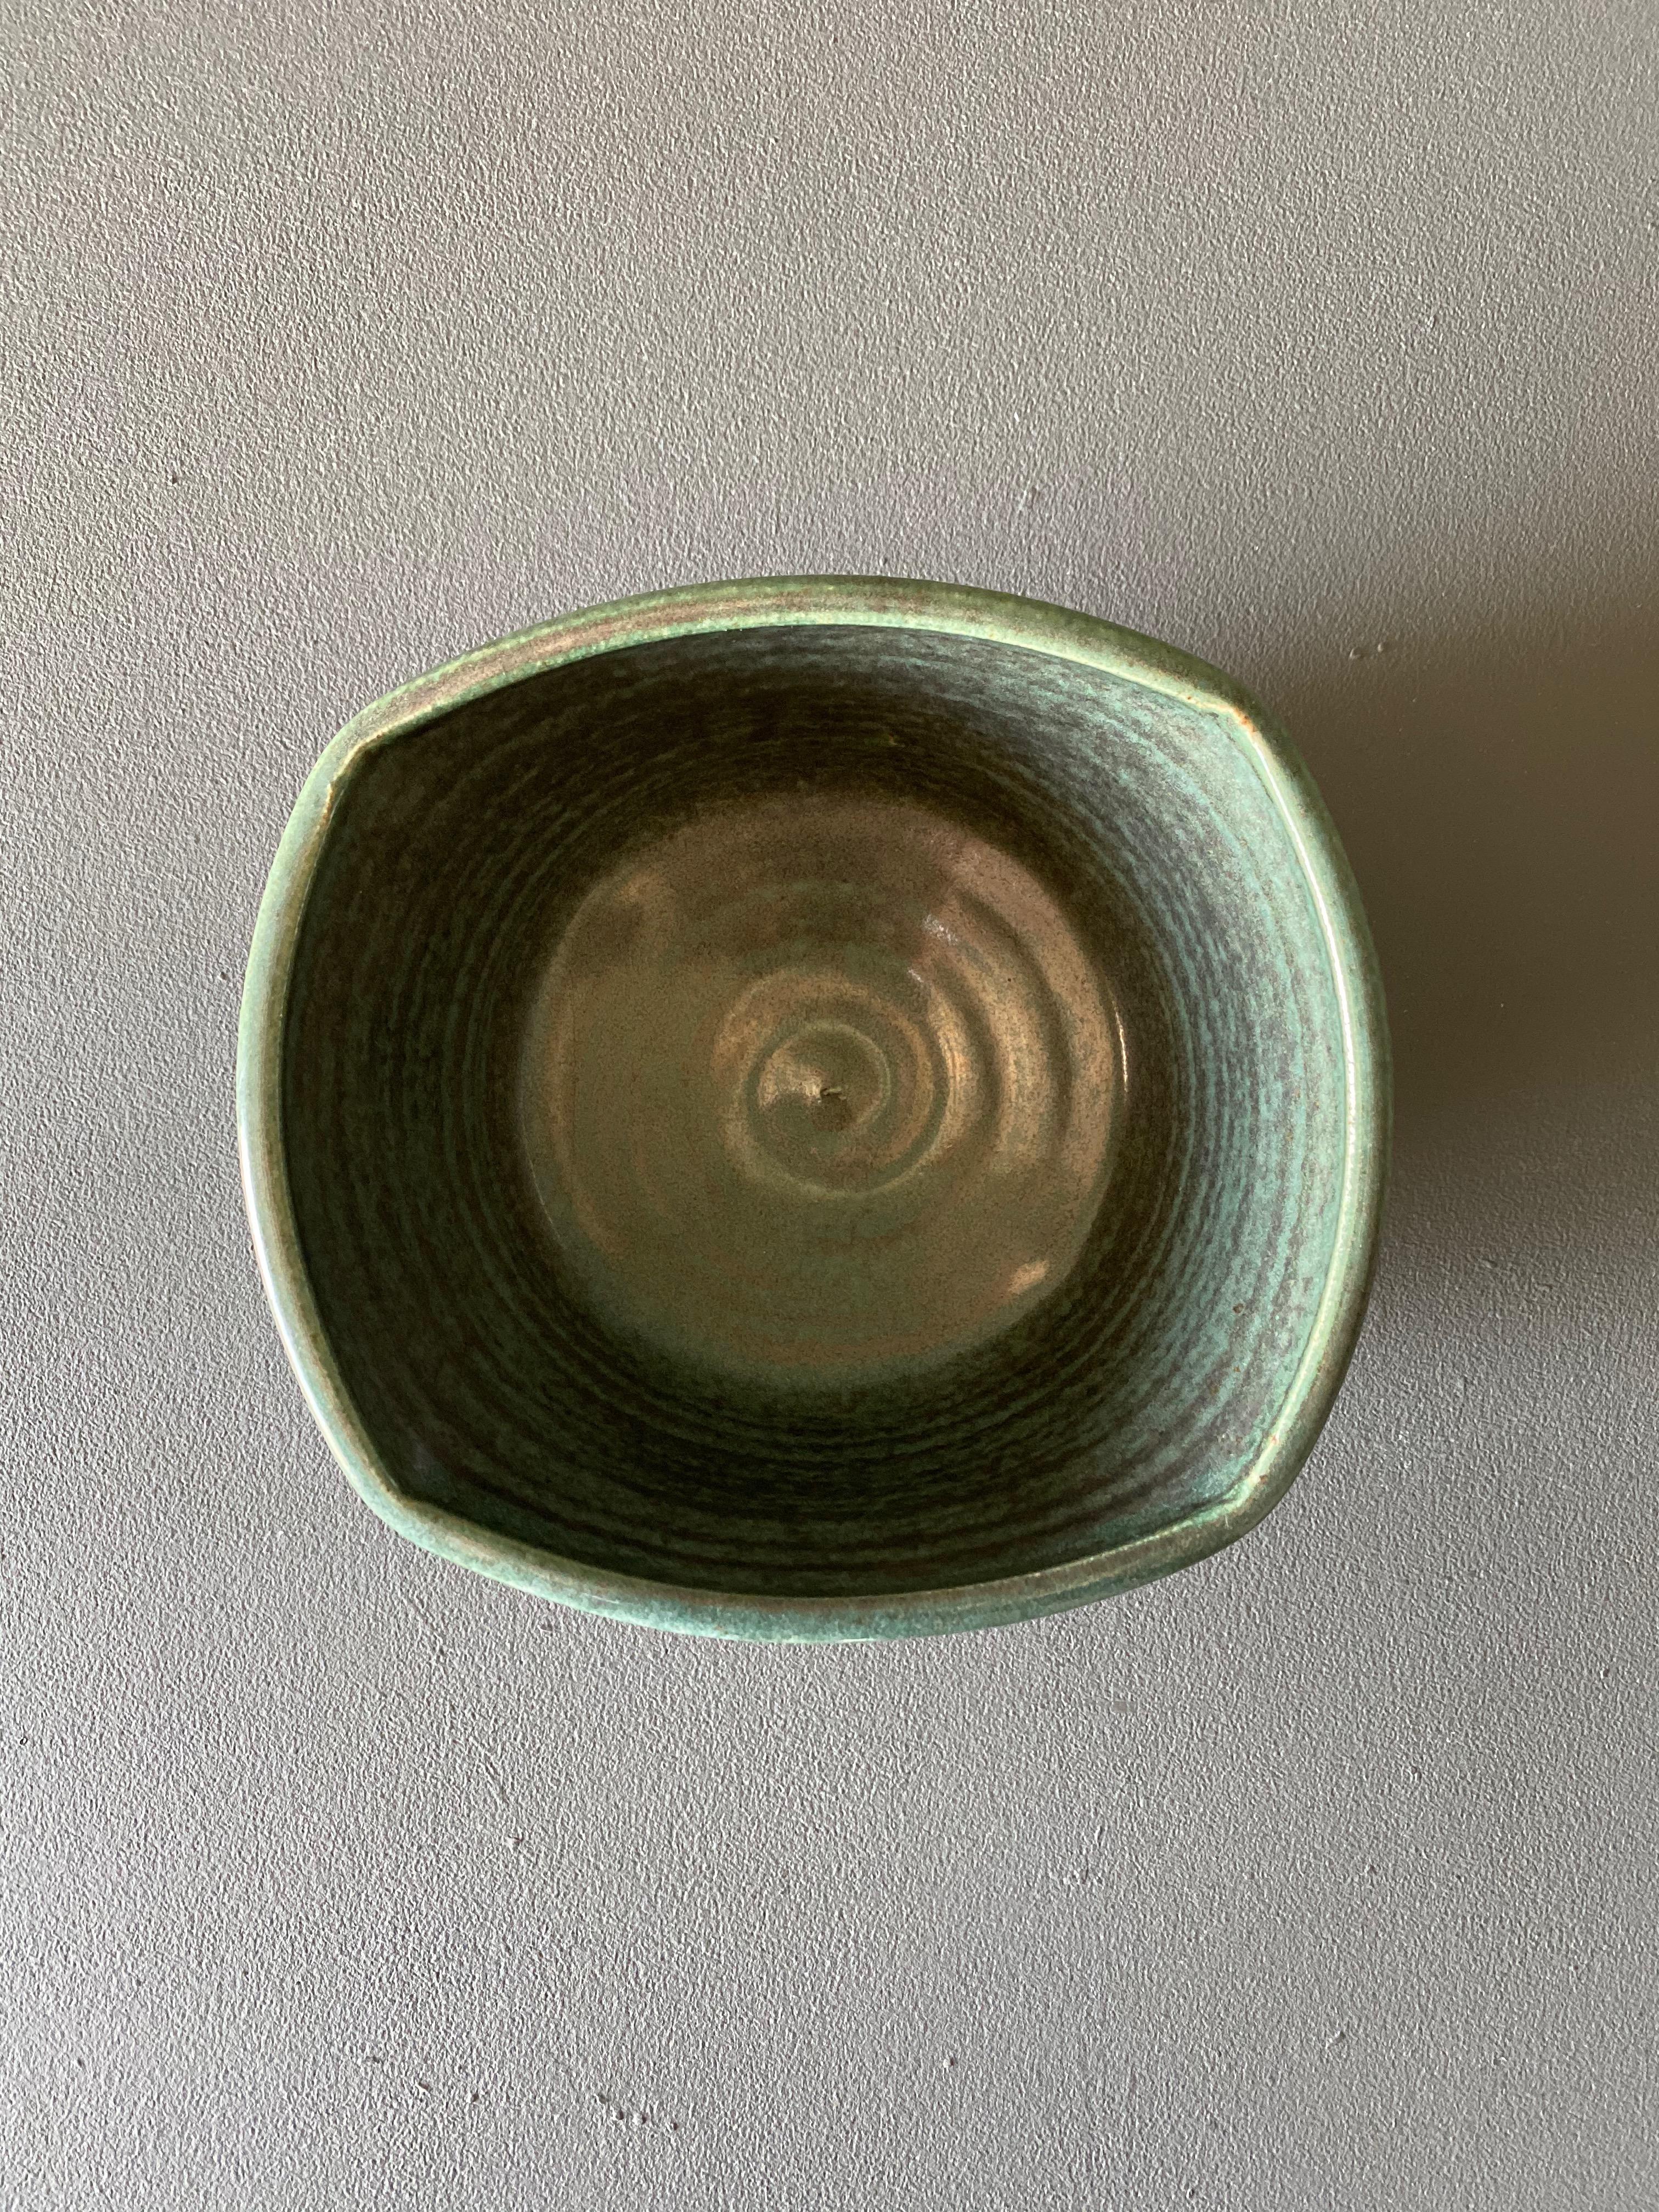 Studio pottery vessel / planter w/ green glaze. Signed.